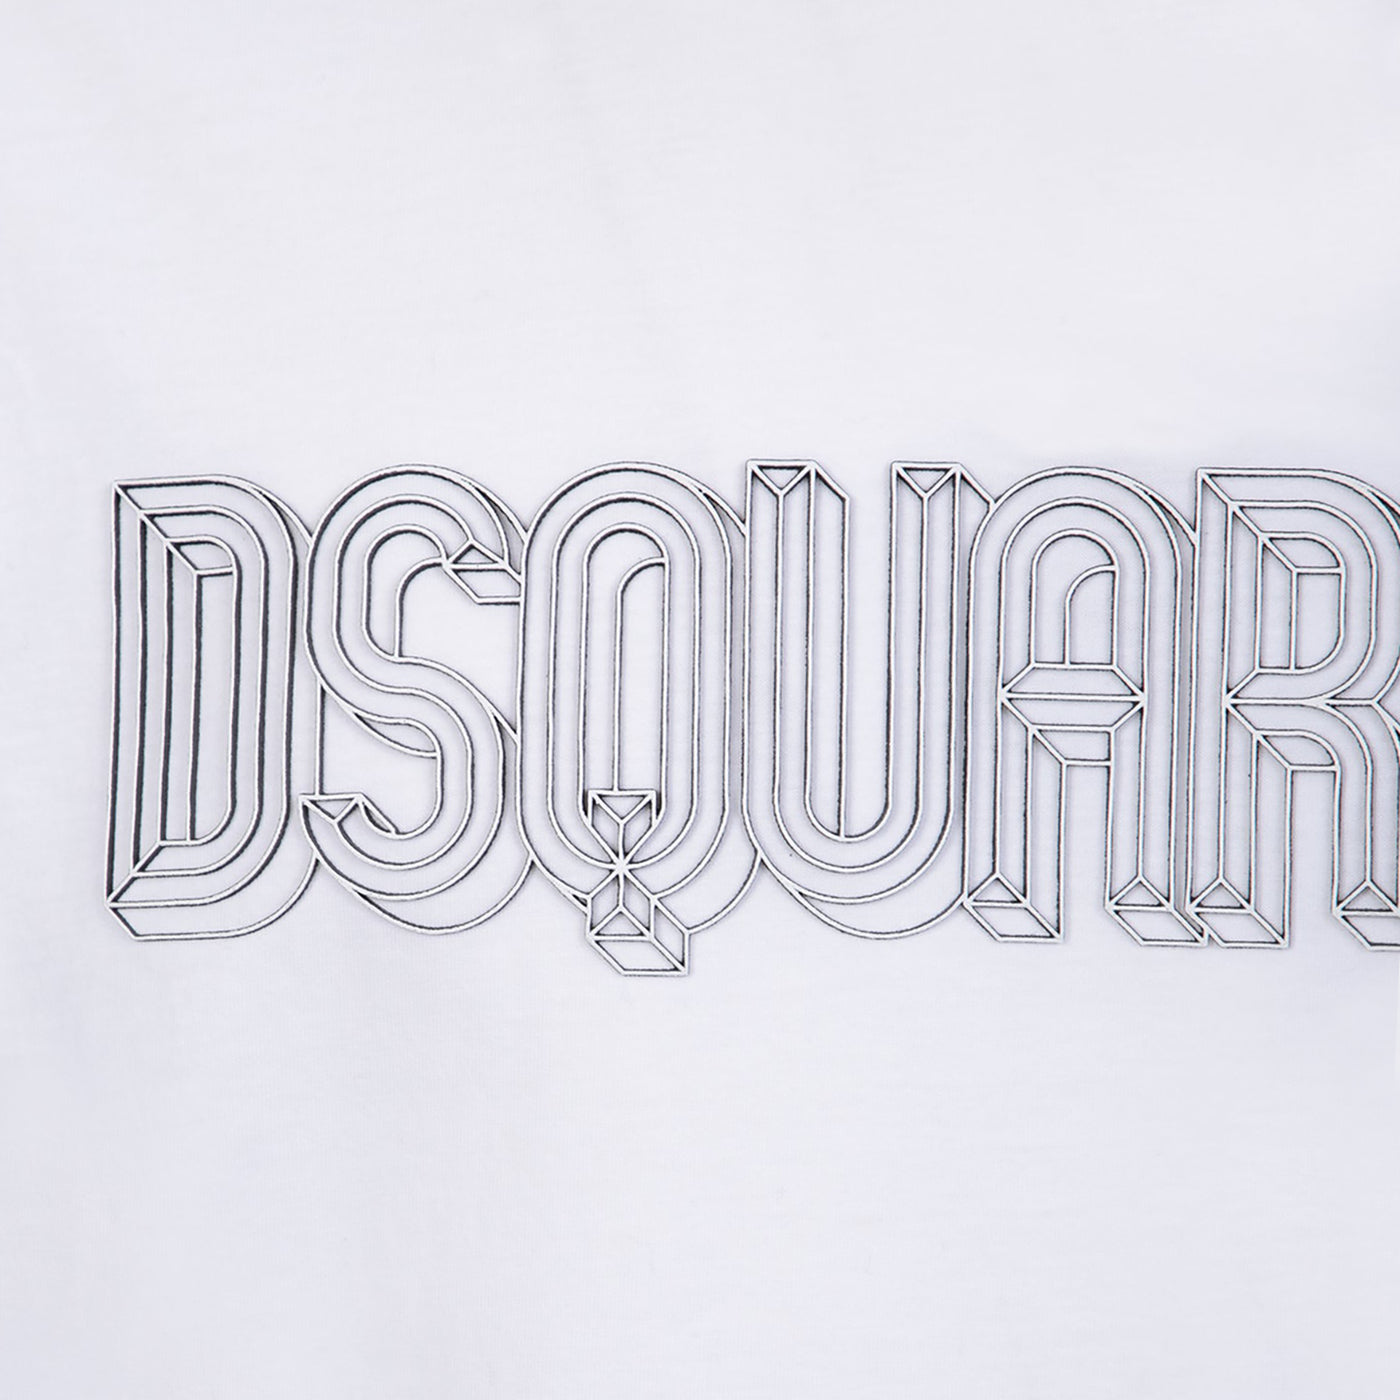 DSquared2 Cool T-Shirt